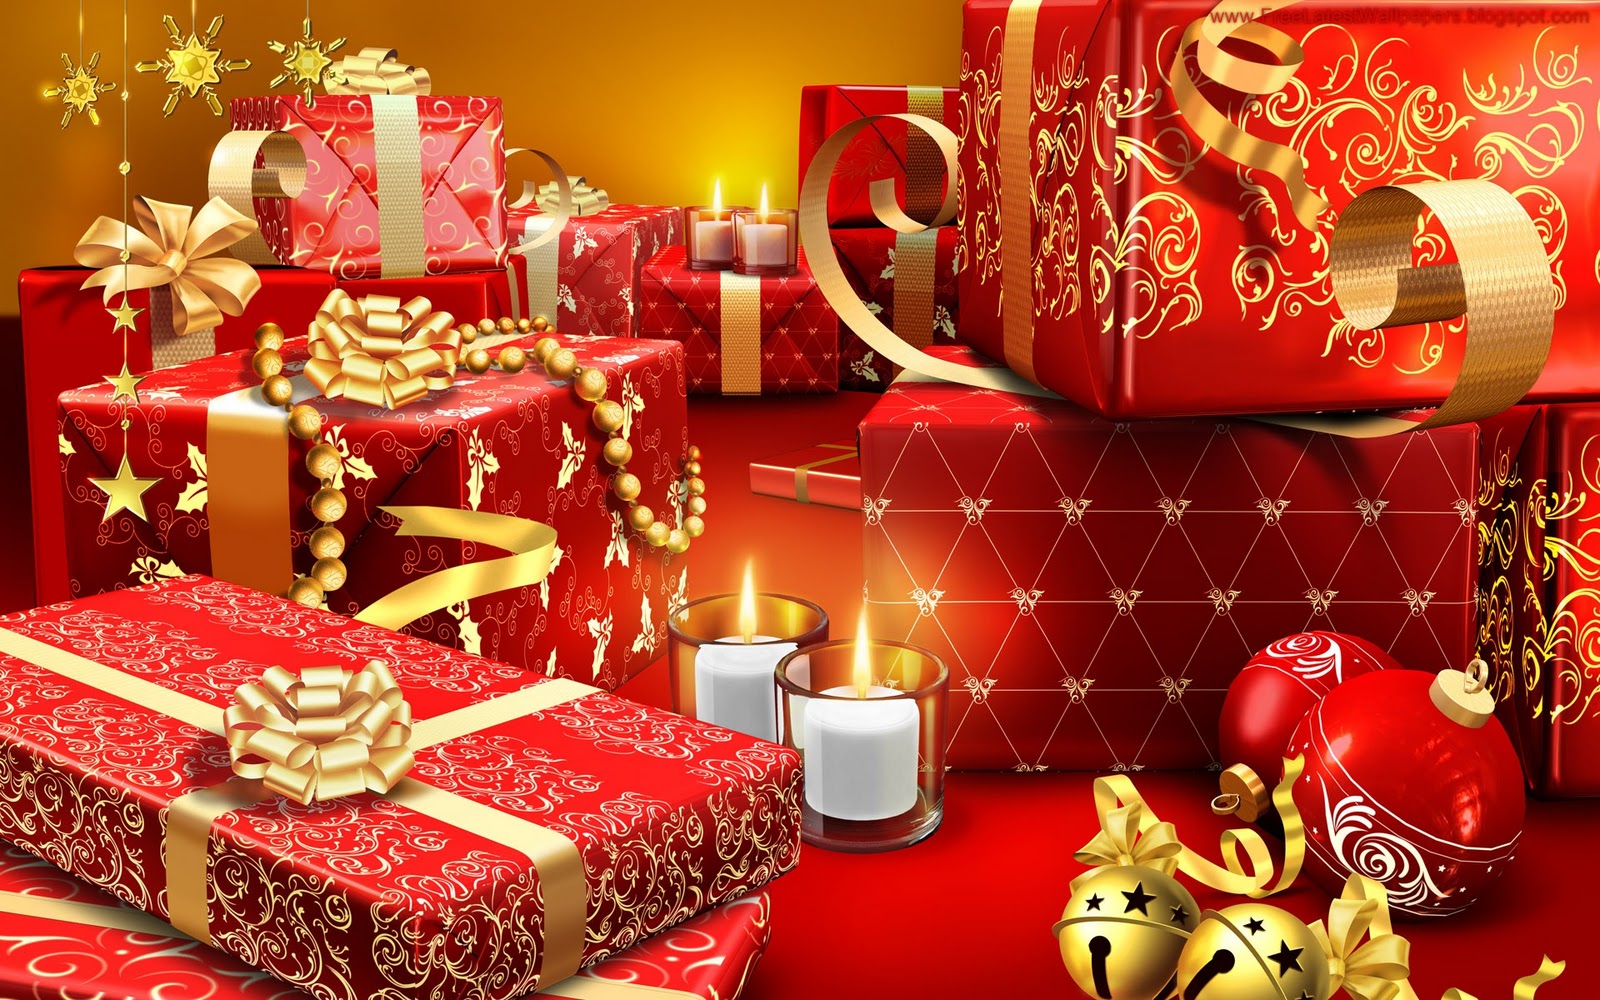 http://4.bp.blogspot.com/_4ScUb_jMfWs/TPIZwHuMLeI/AAAAAAAAAAU/4p9k7rVqdpM/s1600/Christmas+HD+Wallpapers+1920x1200+%25281%2529.jpg